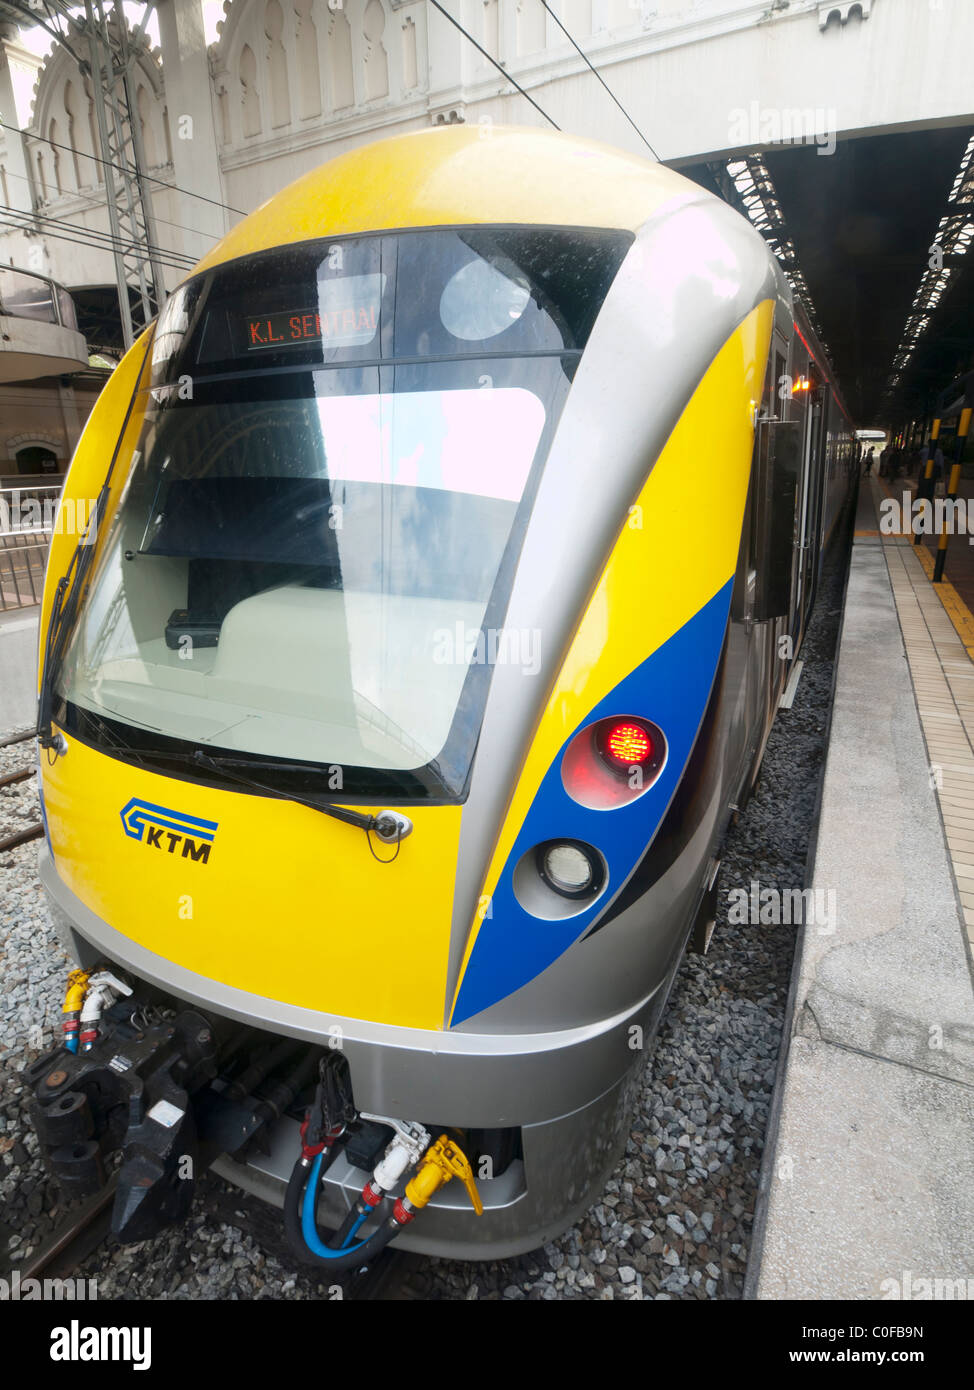 KTM train in Kuala Lumpur Stock Photo